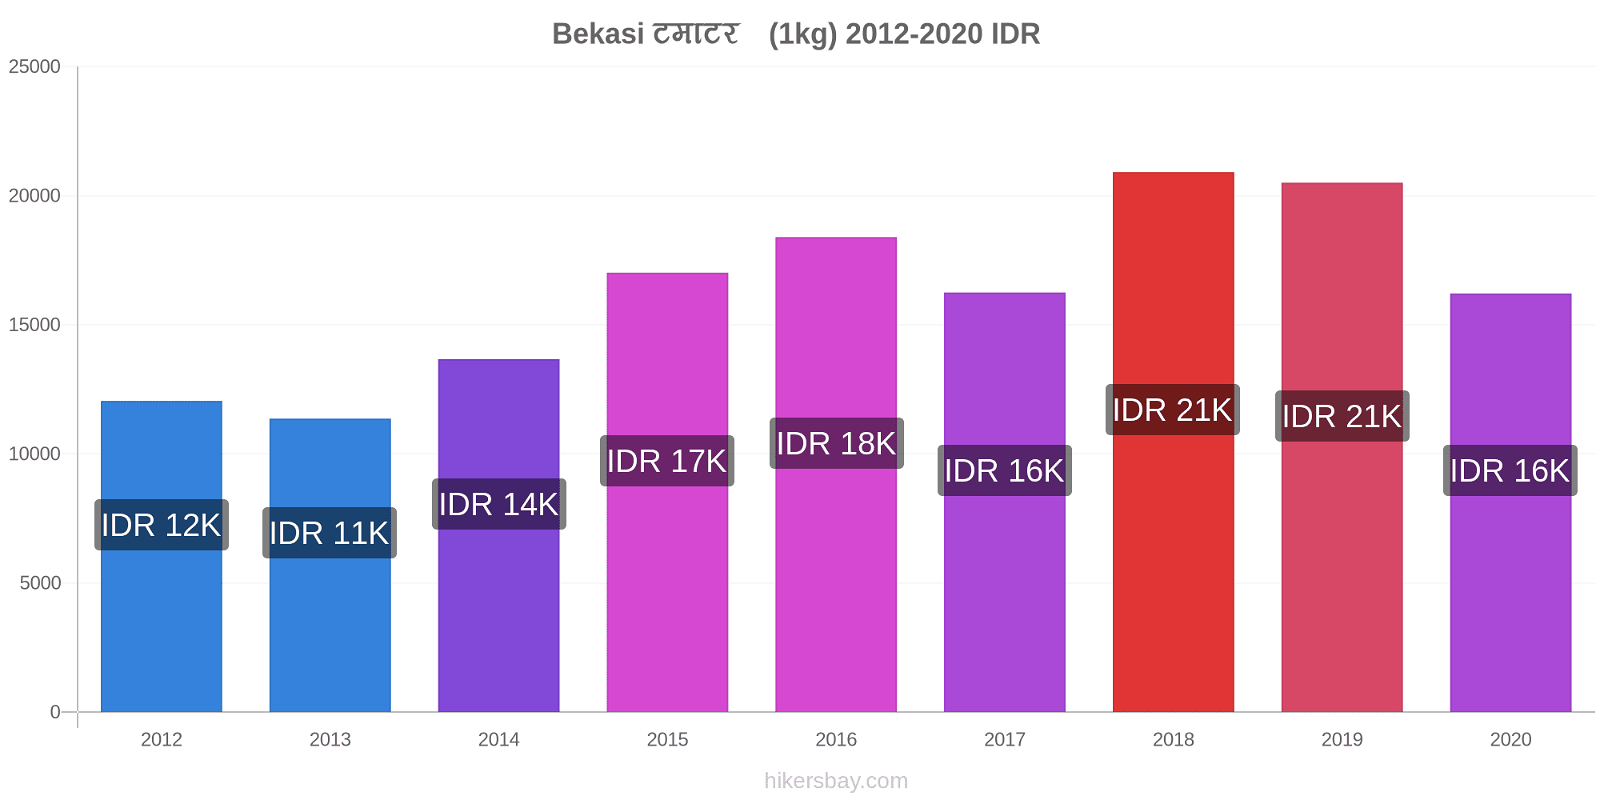 Bekasi मूल्य परिवर्तन टमाटर (1kg) hikersbay.com